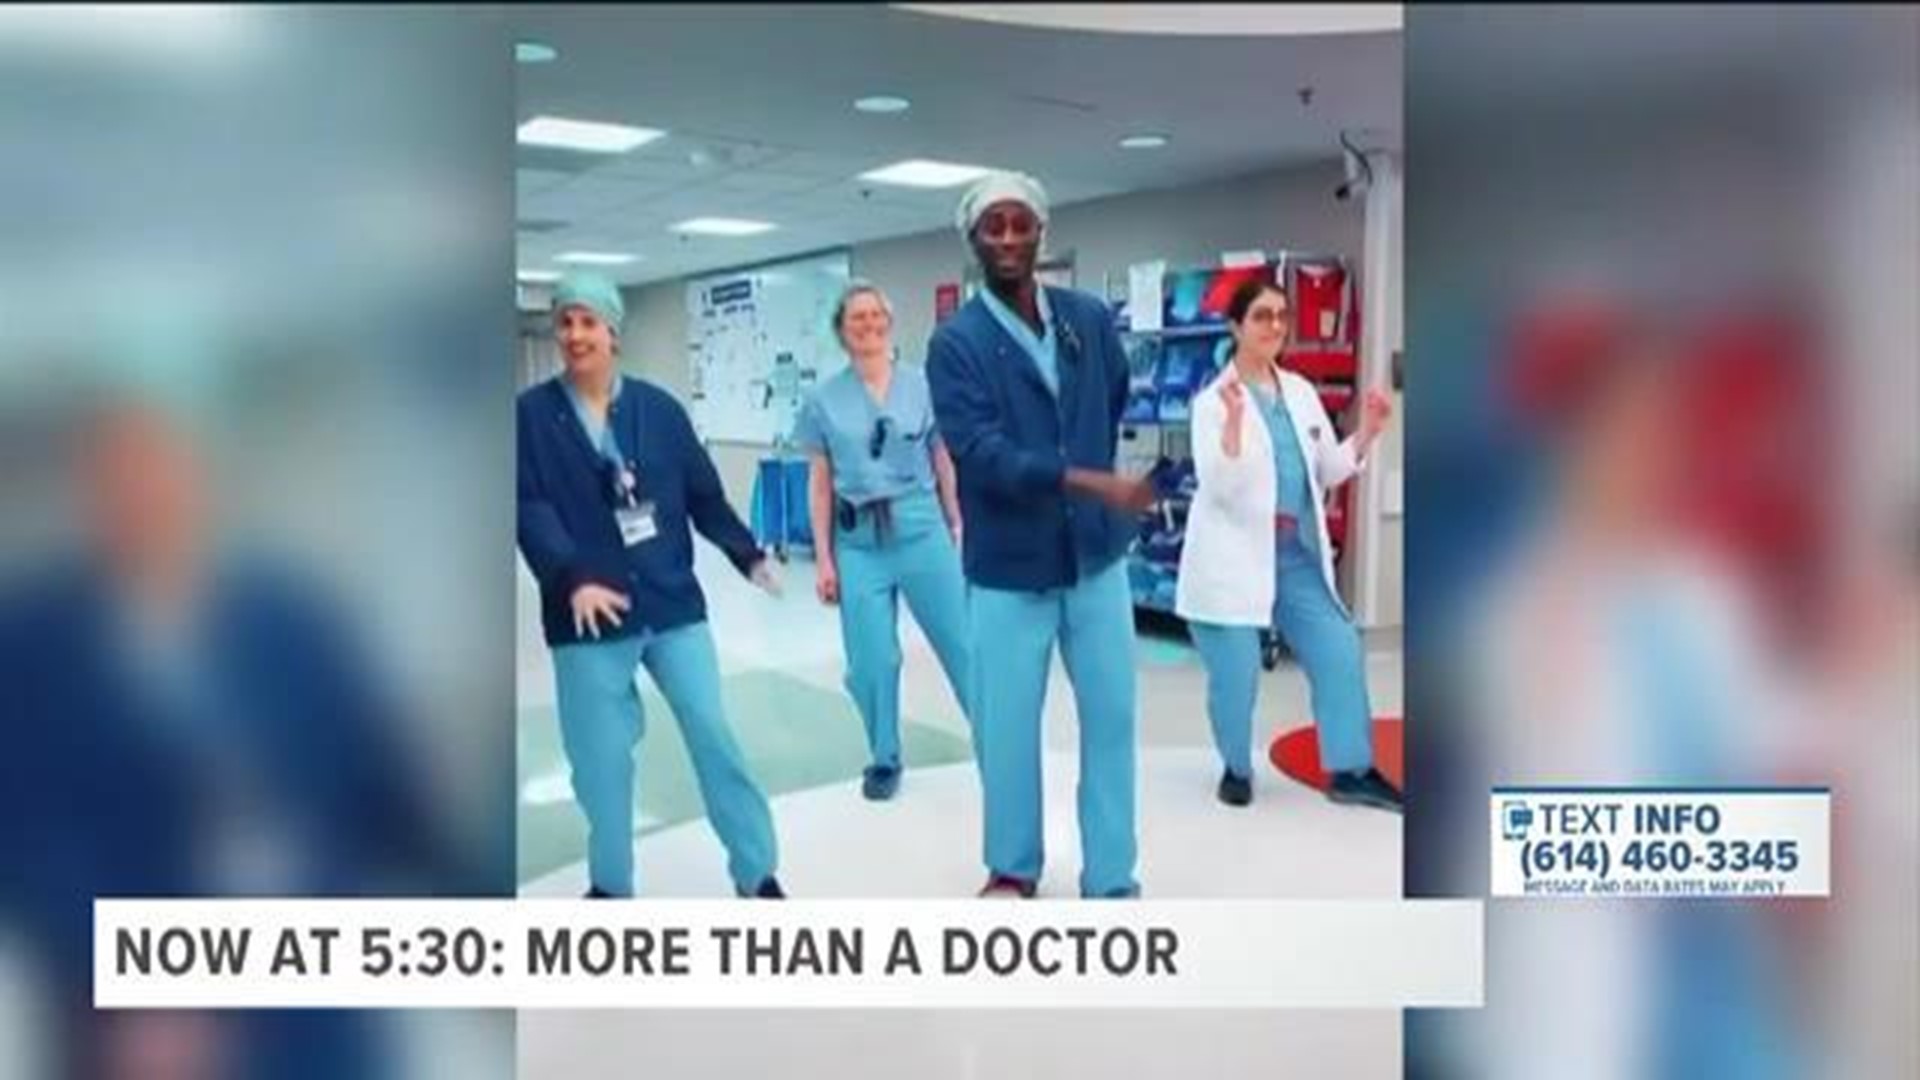 Viral 'TikTok Doc' on mission to help people beyond medicine